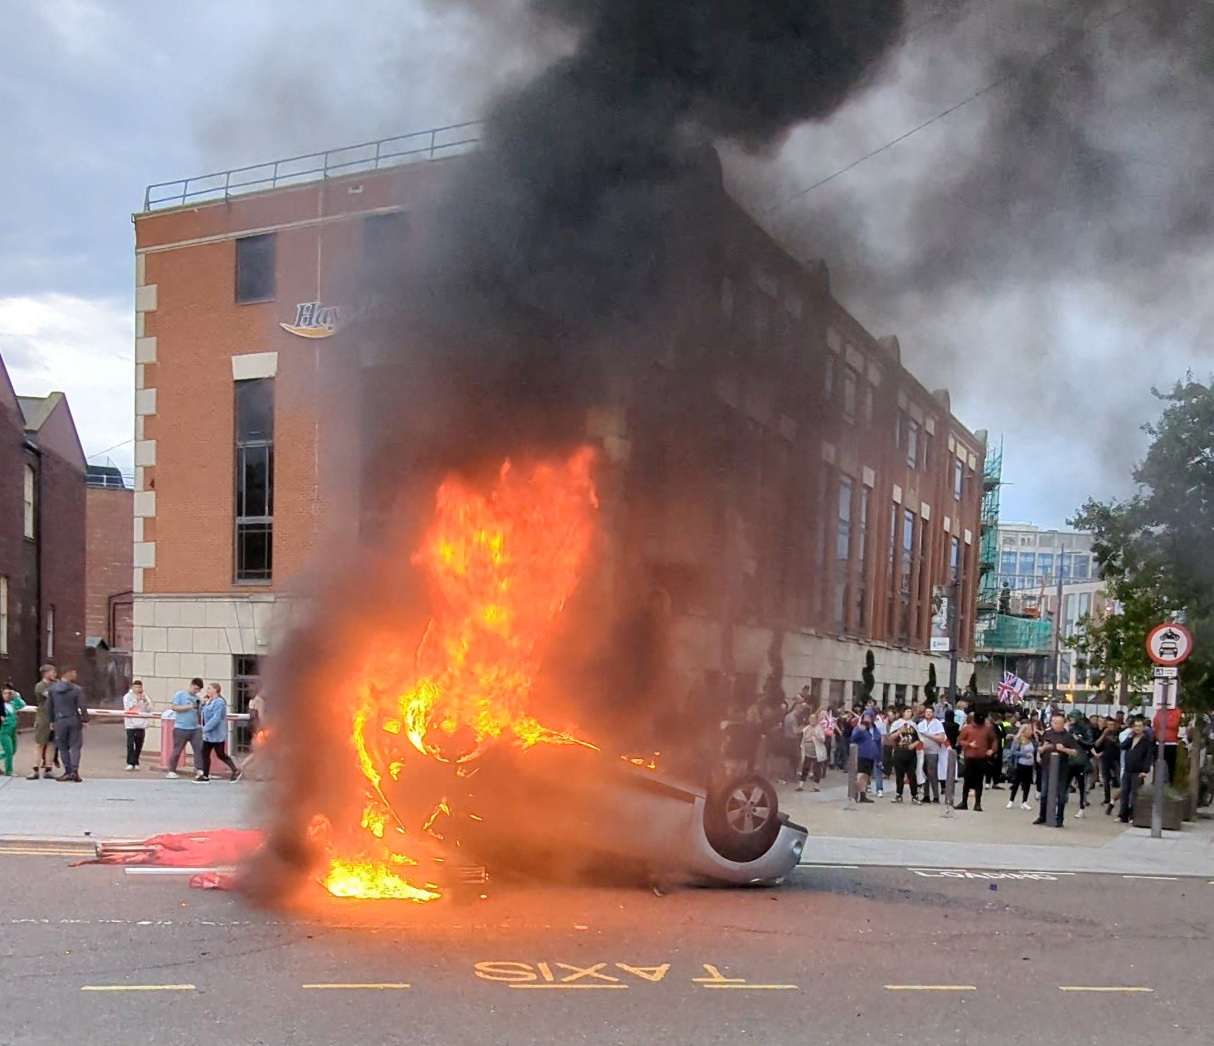 Renewed rioting sweeps British cities in wake of child murder